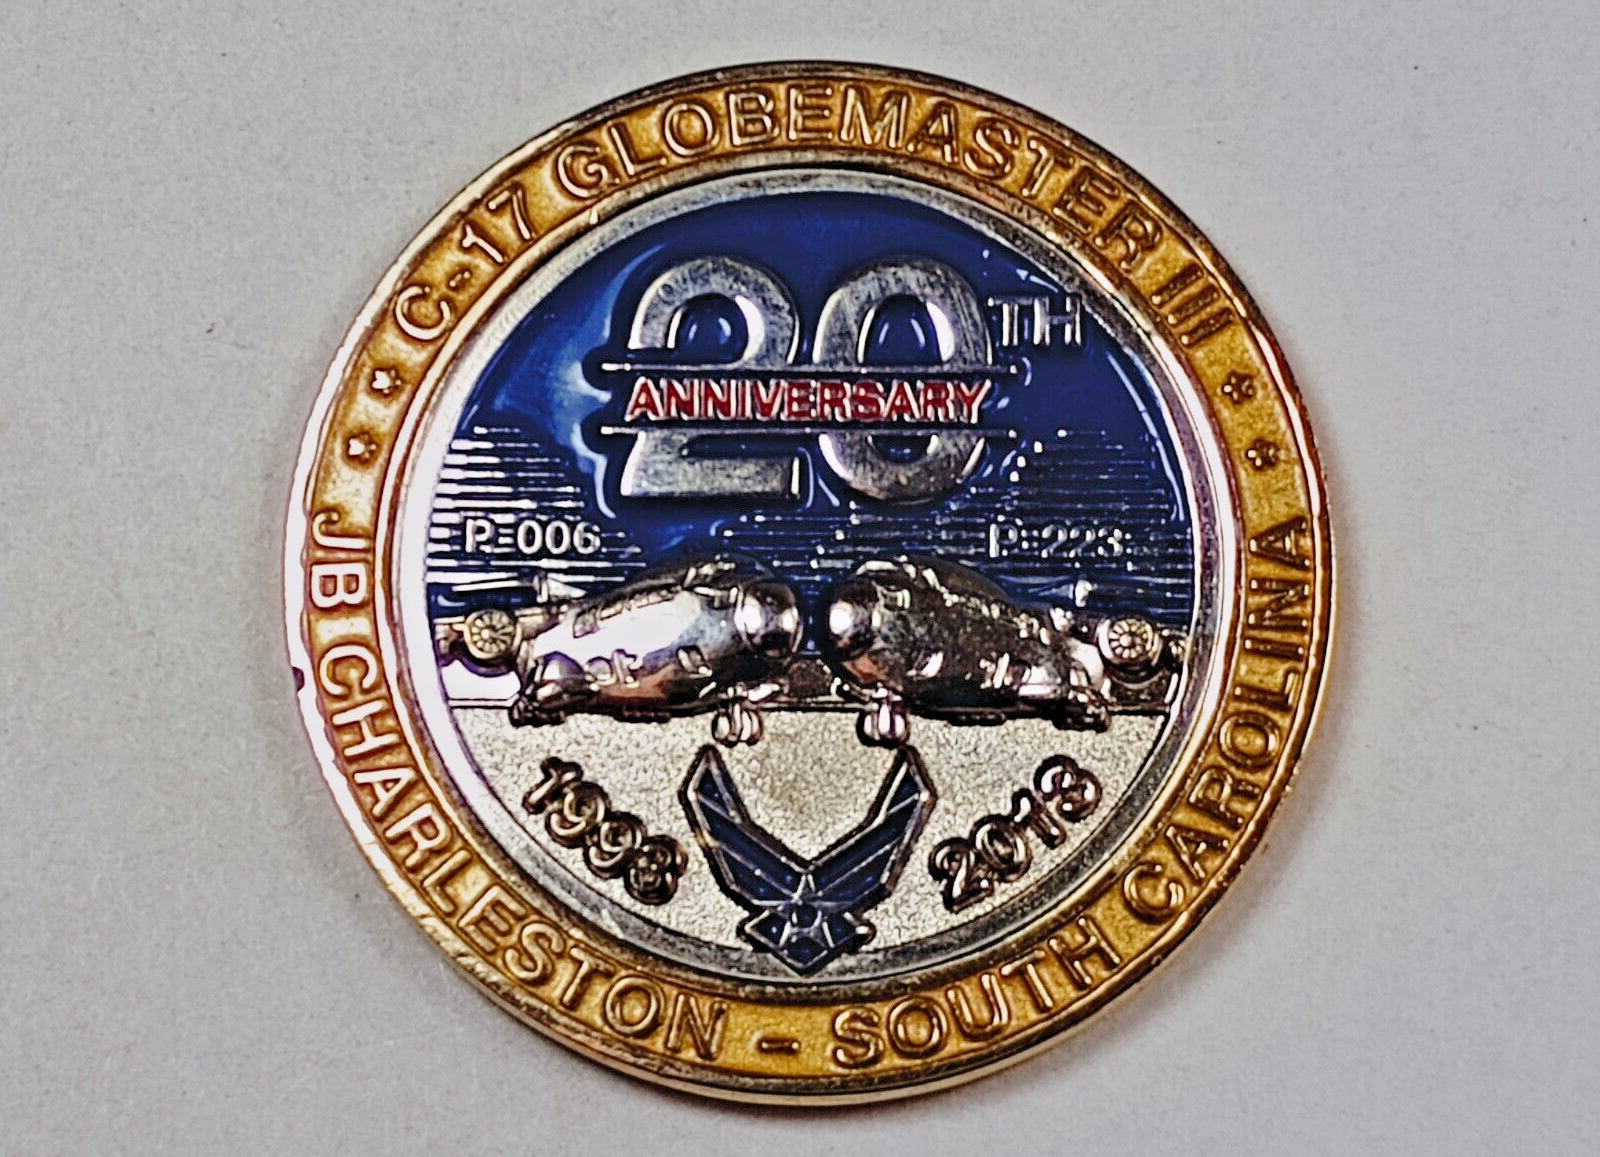 USAF- Boeing C-17 Globemaster III 20th Anniversary 1993-2013 Challenge Coin.